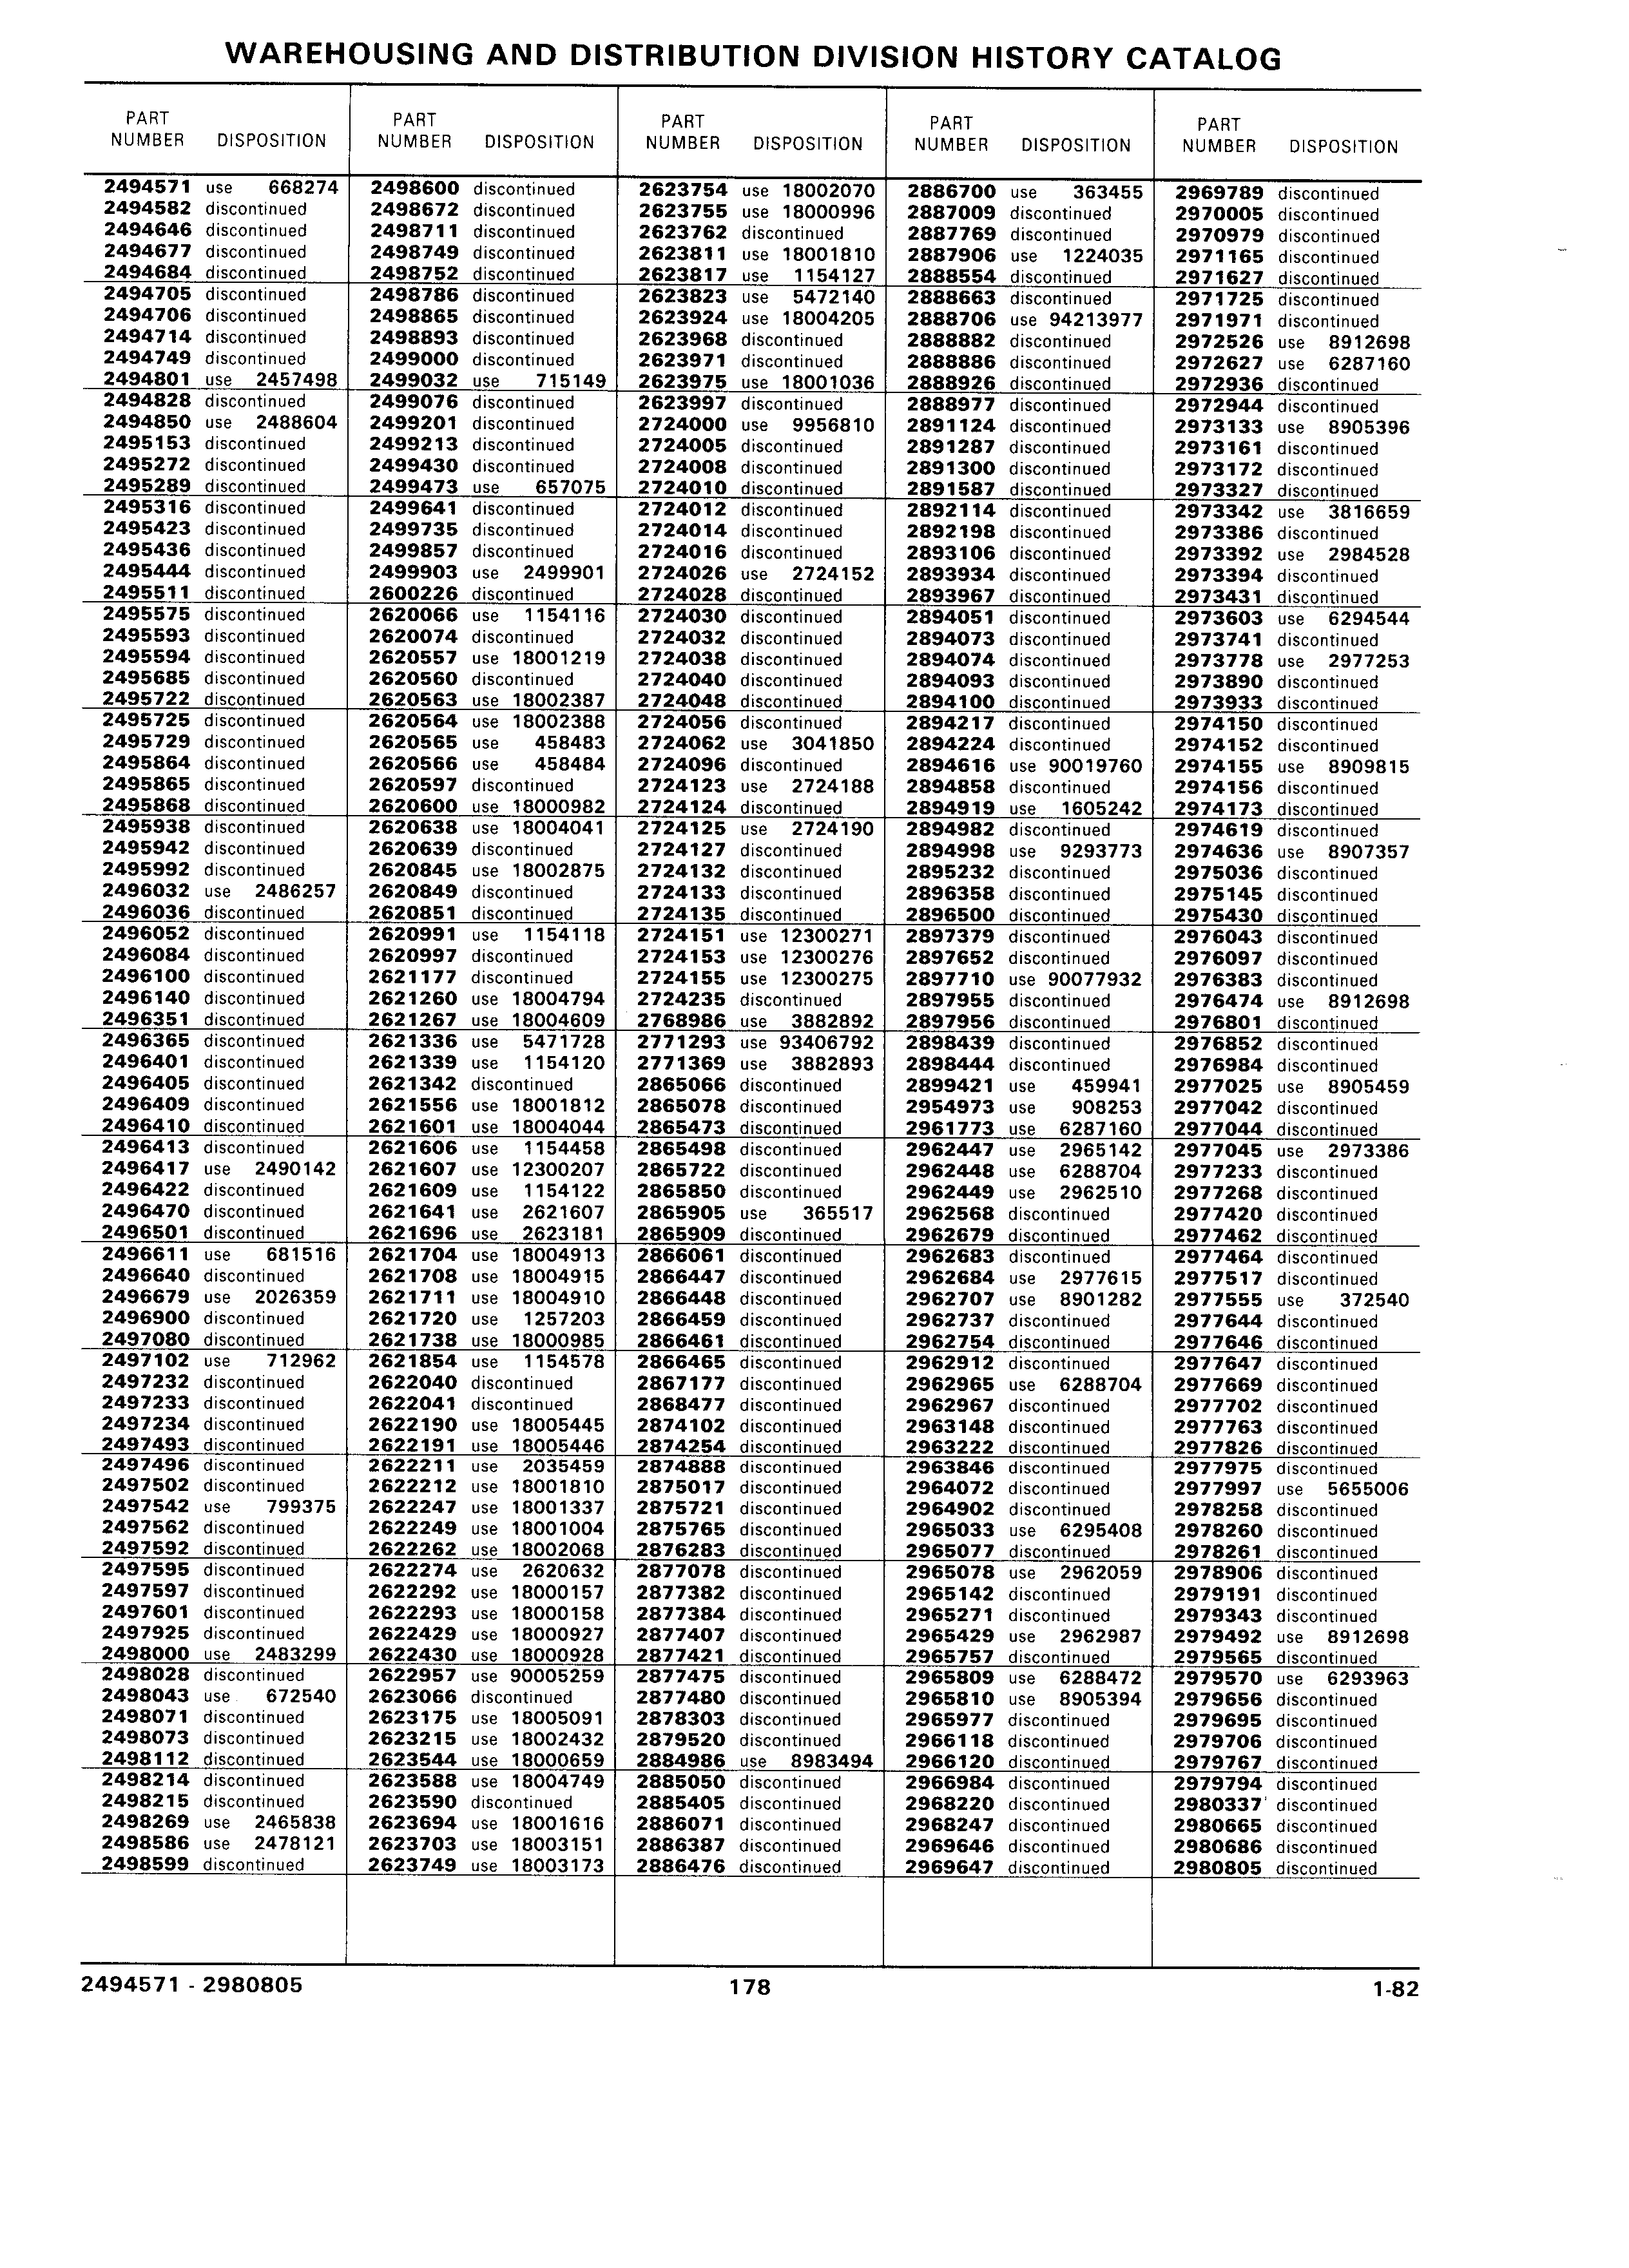 Parts History Catalog 87A December 1981